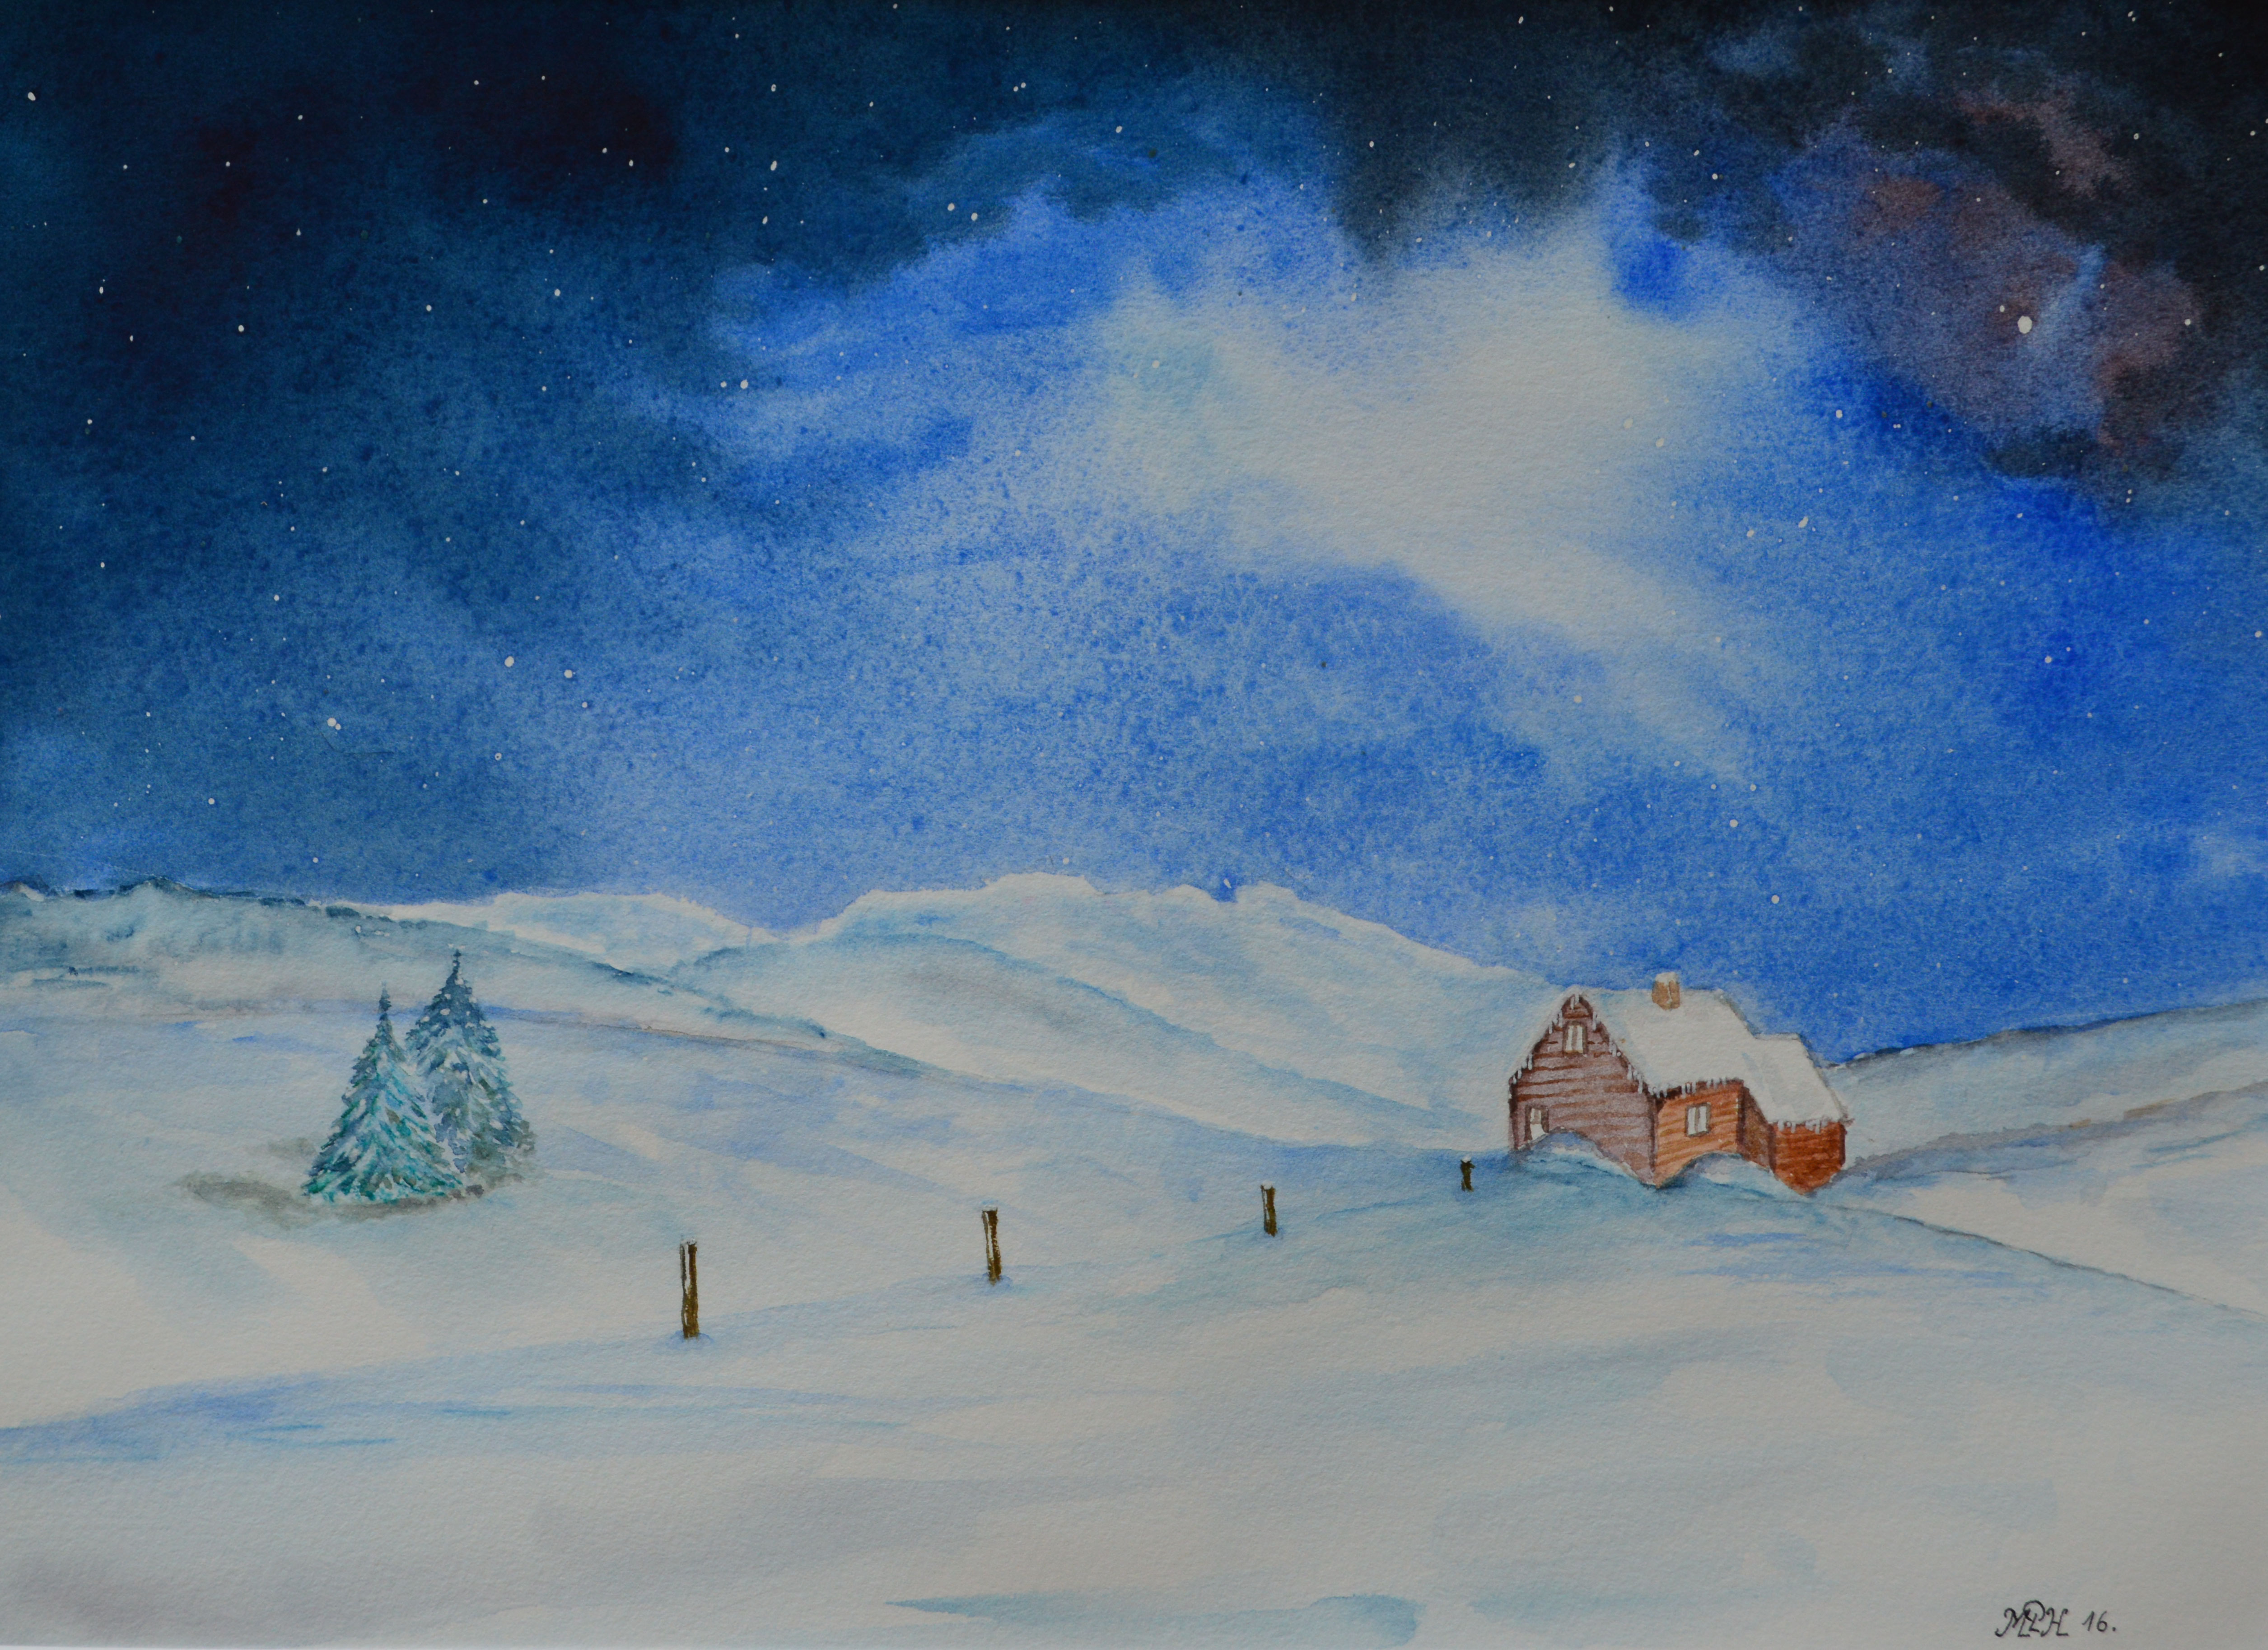 Aquarelle n°87: "Paysage nocturne d'hiver III"